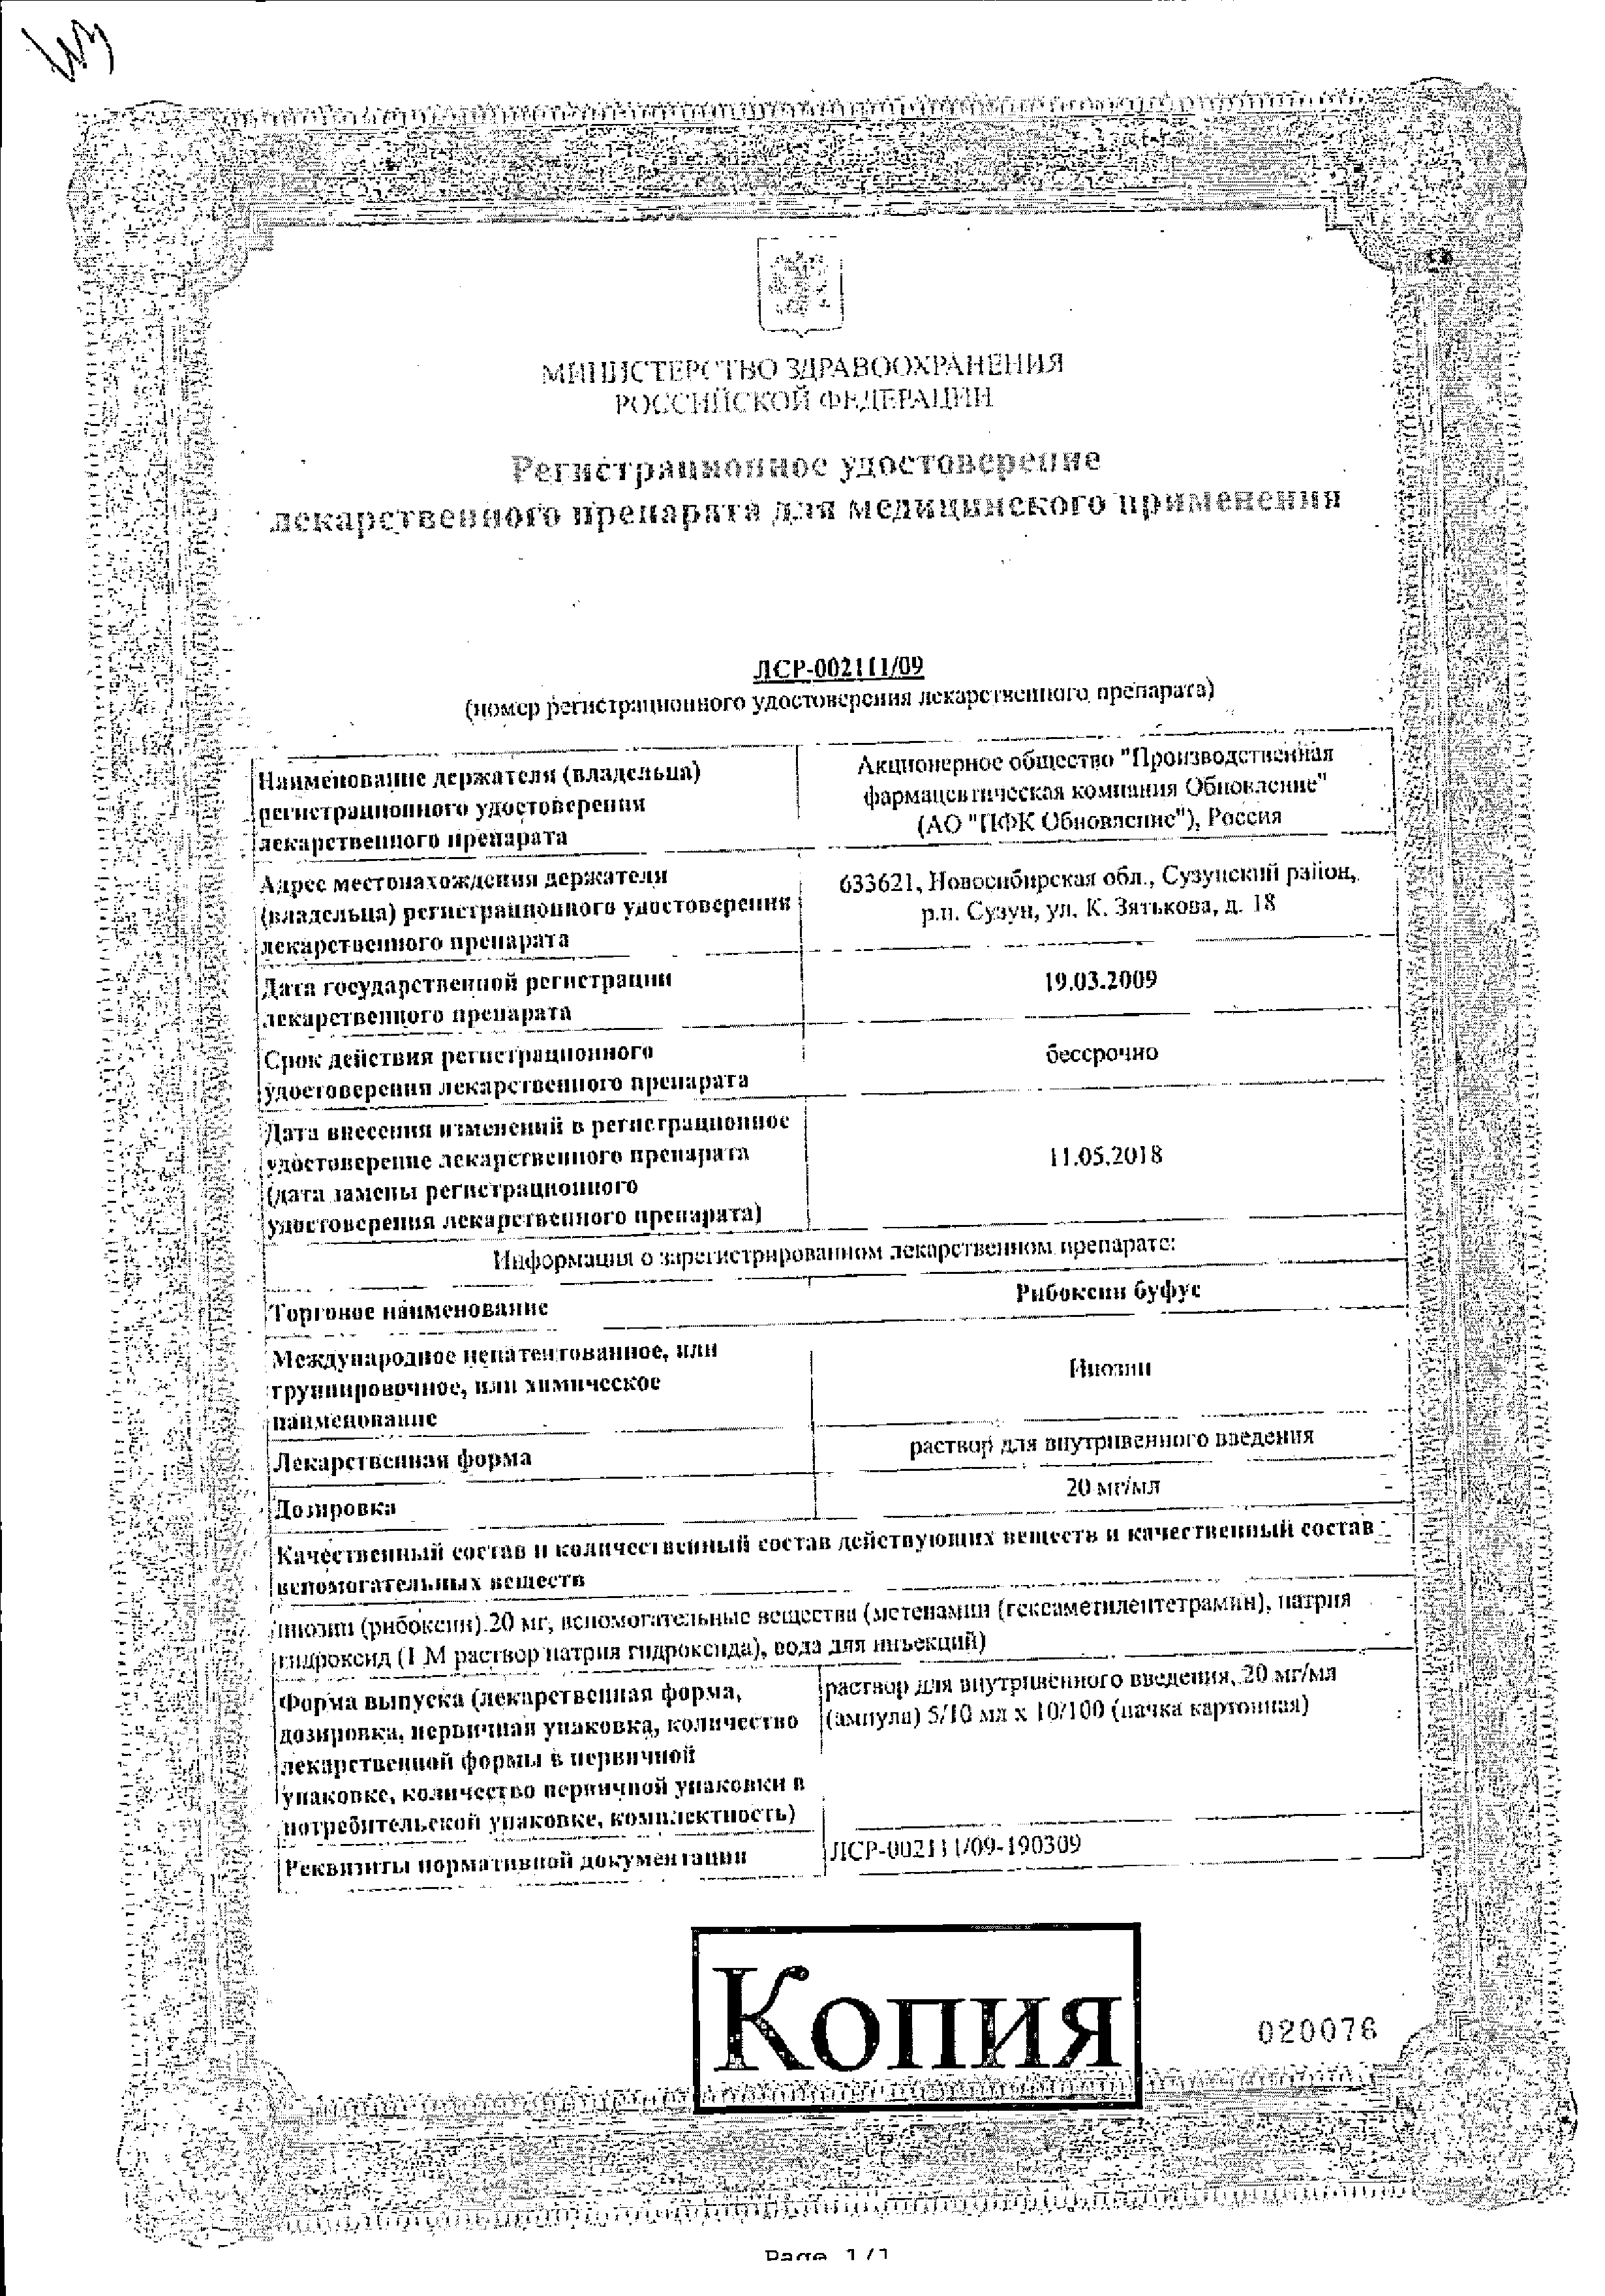 Рибоксин буфус сертификат